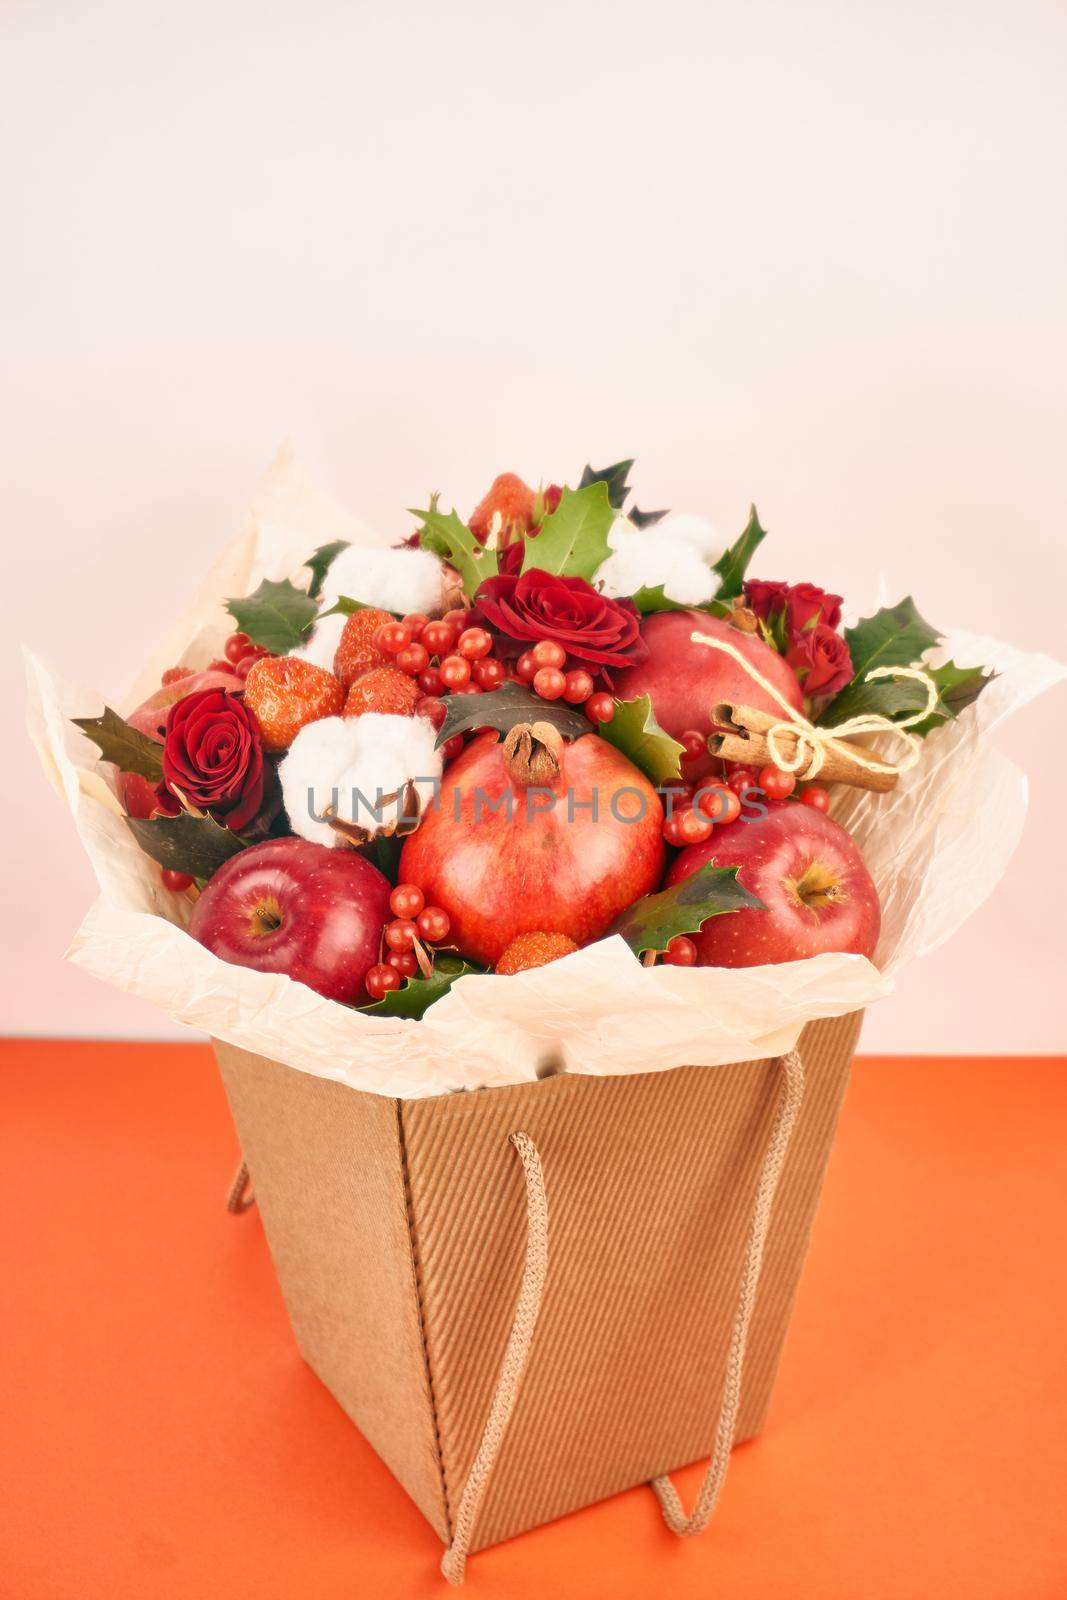 fruit vitamins decoration romance gift food pink background by Vichizh